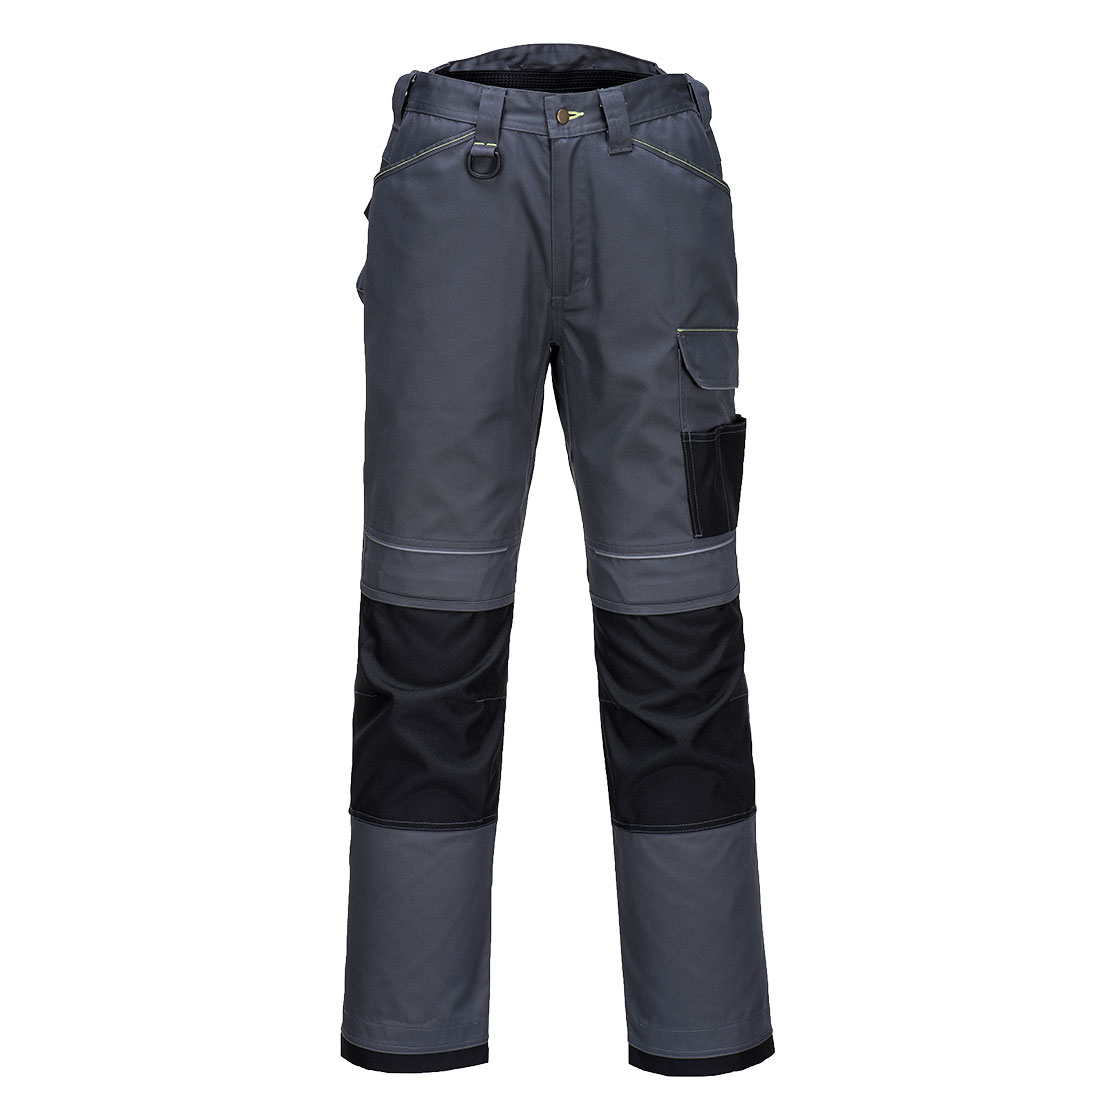 Portwest T601-Gris/Negro 38 regular Combate Cargo Pantalones De Trabajo Pantalones de vestir PW3 